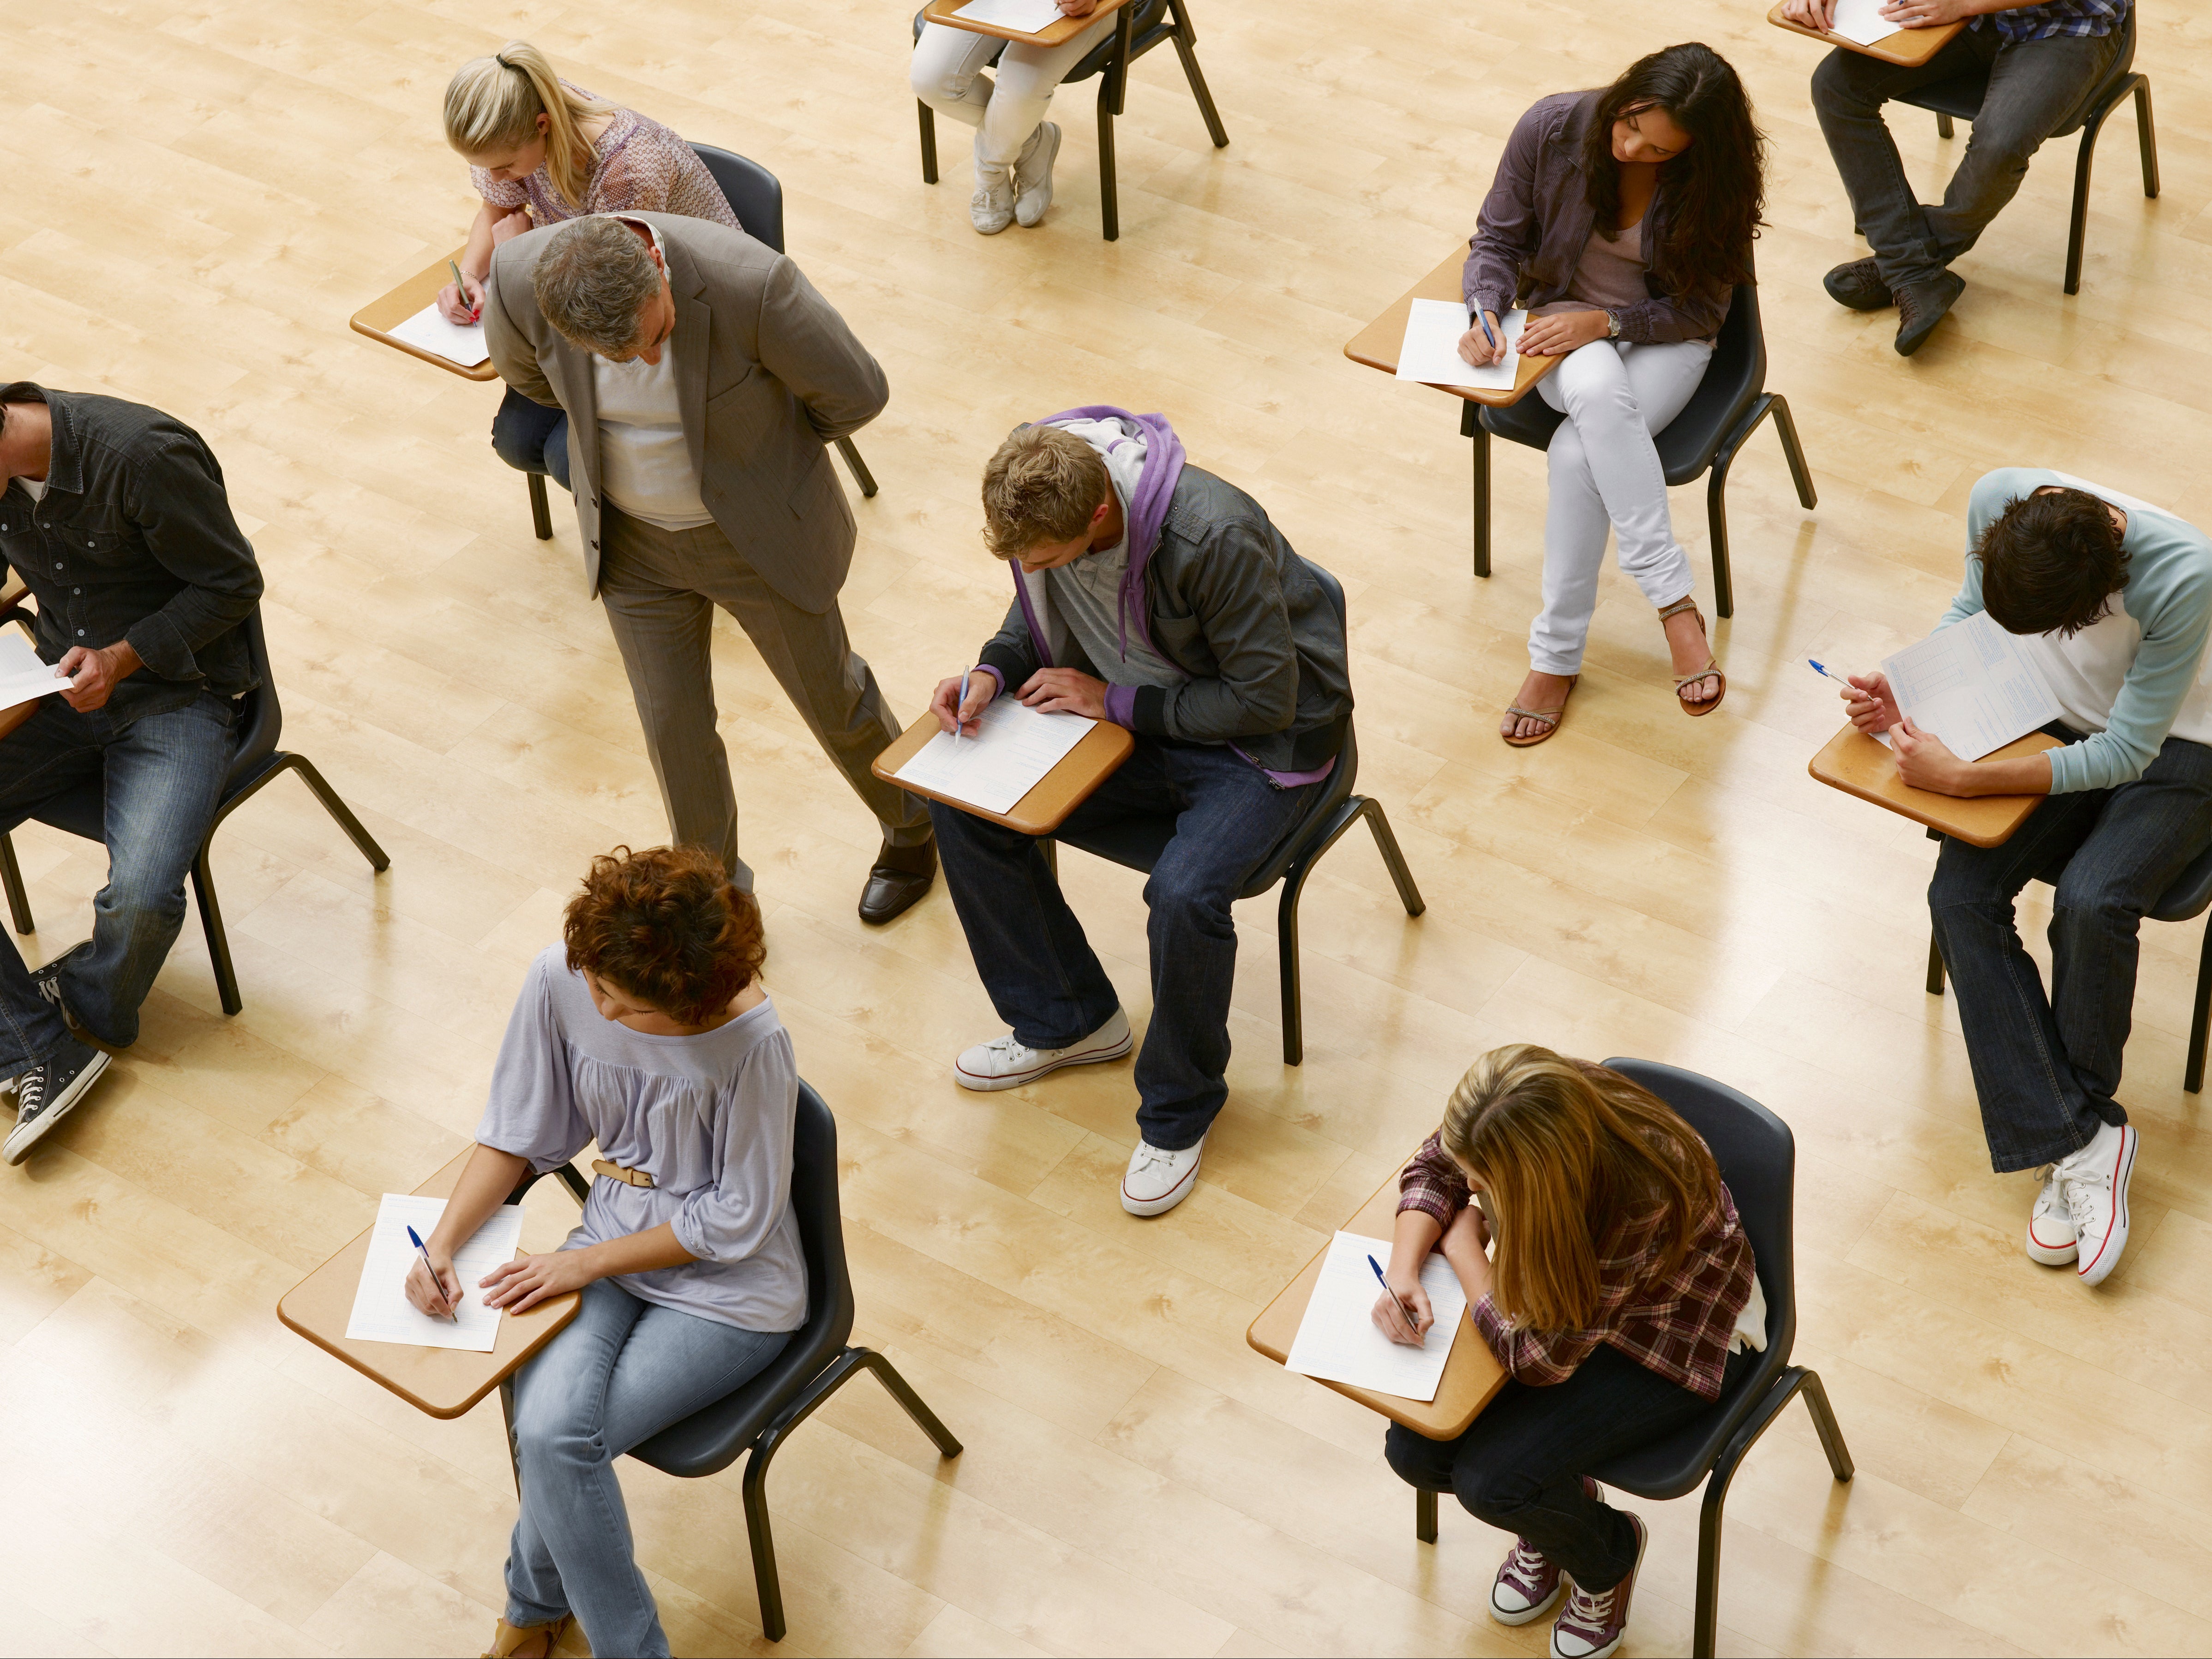 Universities should consider grammar when marking exams, according to England’s higher education regulator